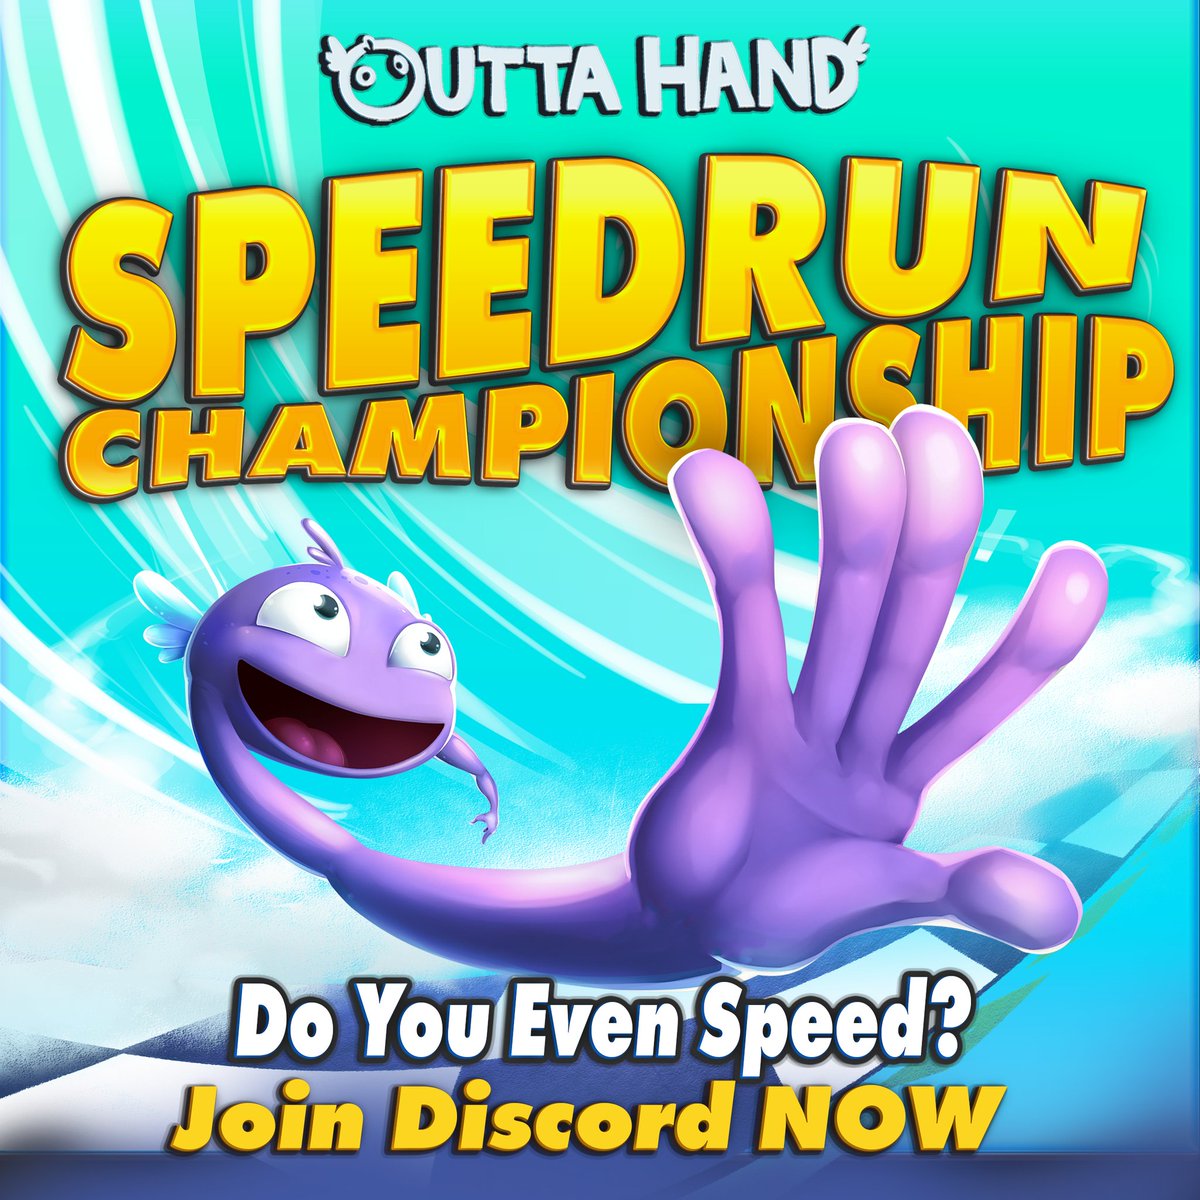 Its race time! Join our discord for updates. Discord.gg/outtahandvr

#outtahand #outtahandvr #gamedev
#videogames #vrgames #metaquest
#metaquest2 #metaquest3 #VRAdventures
#racing #speed #speedrecords #speedrun #speedrunner #new #fyp